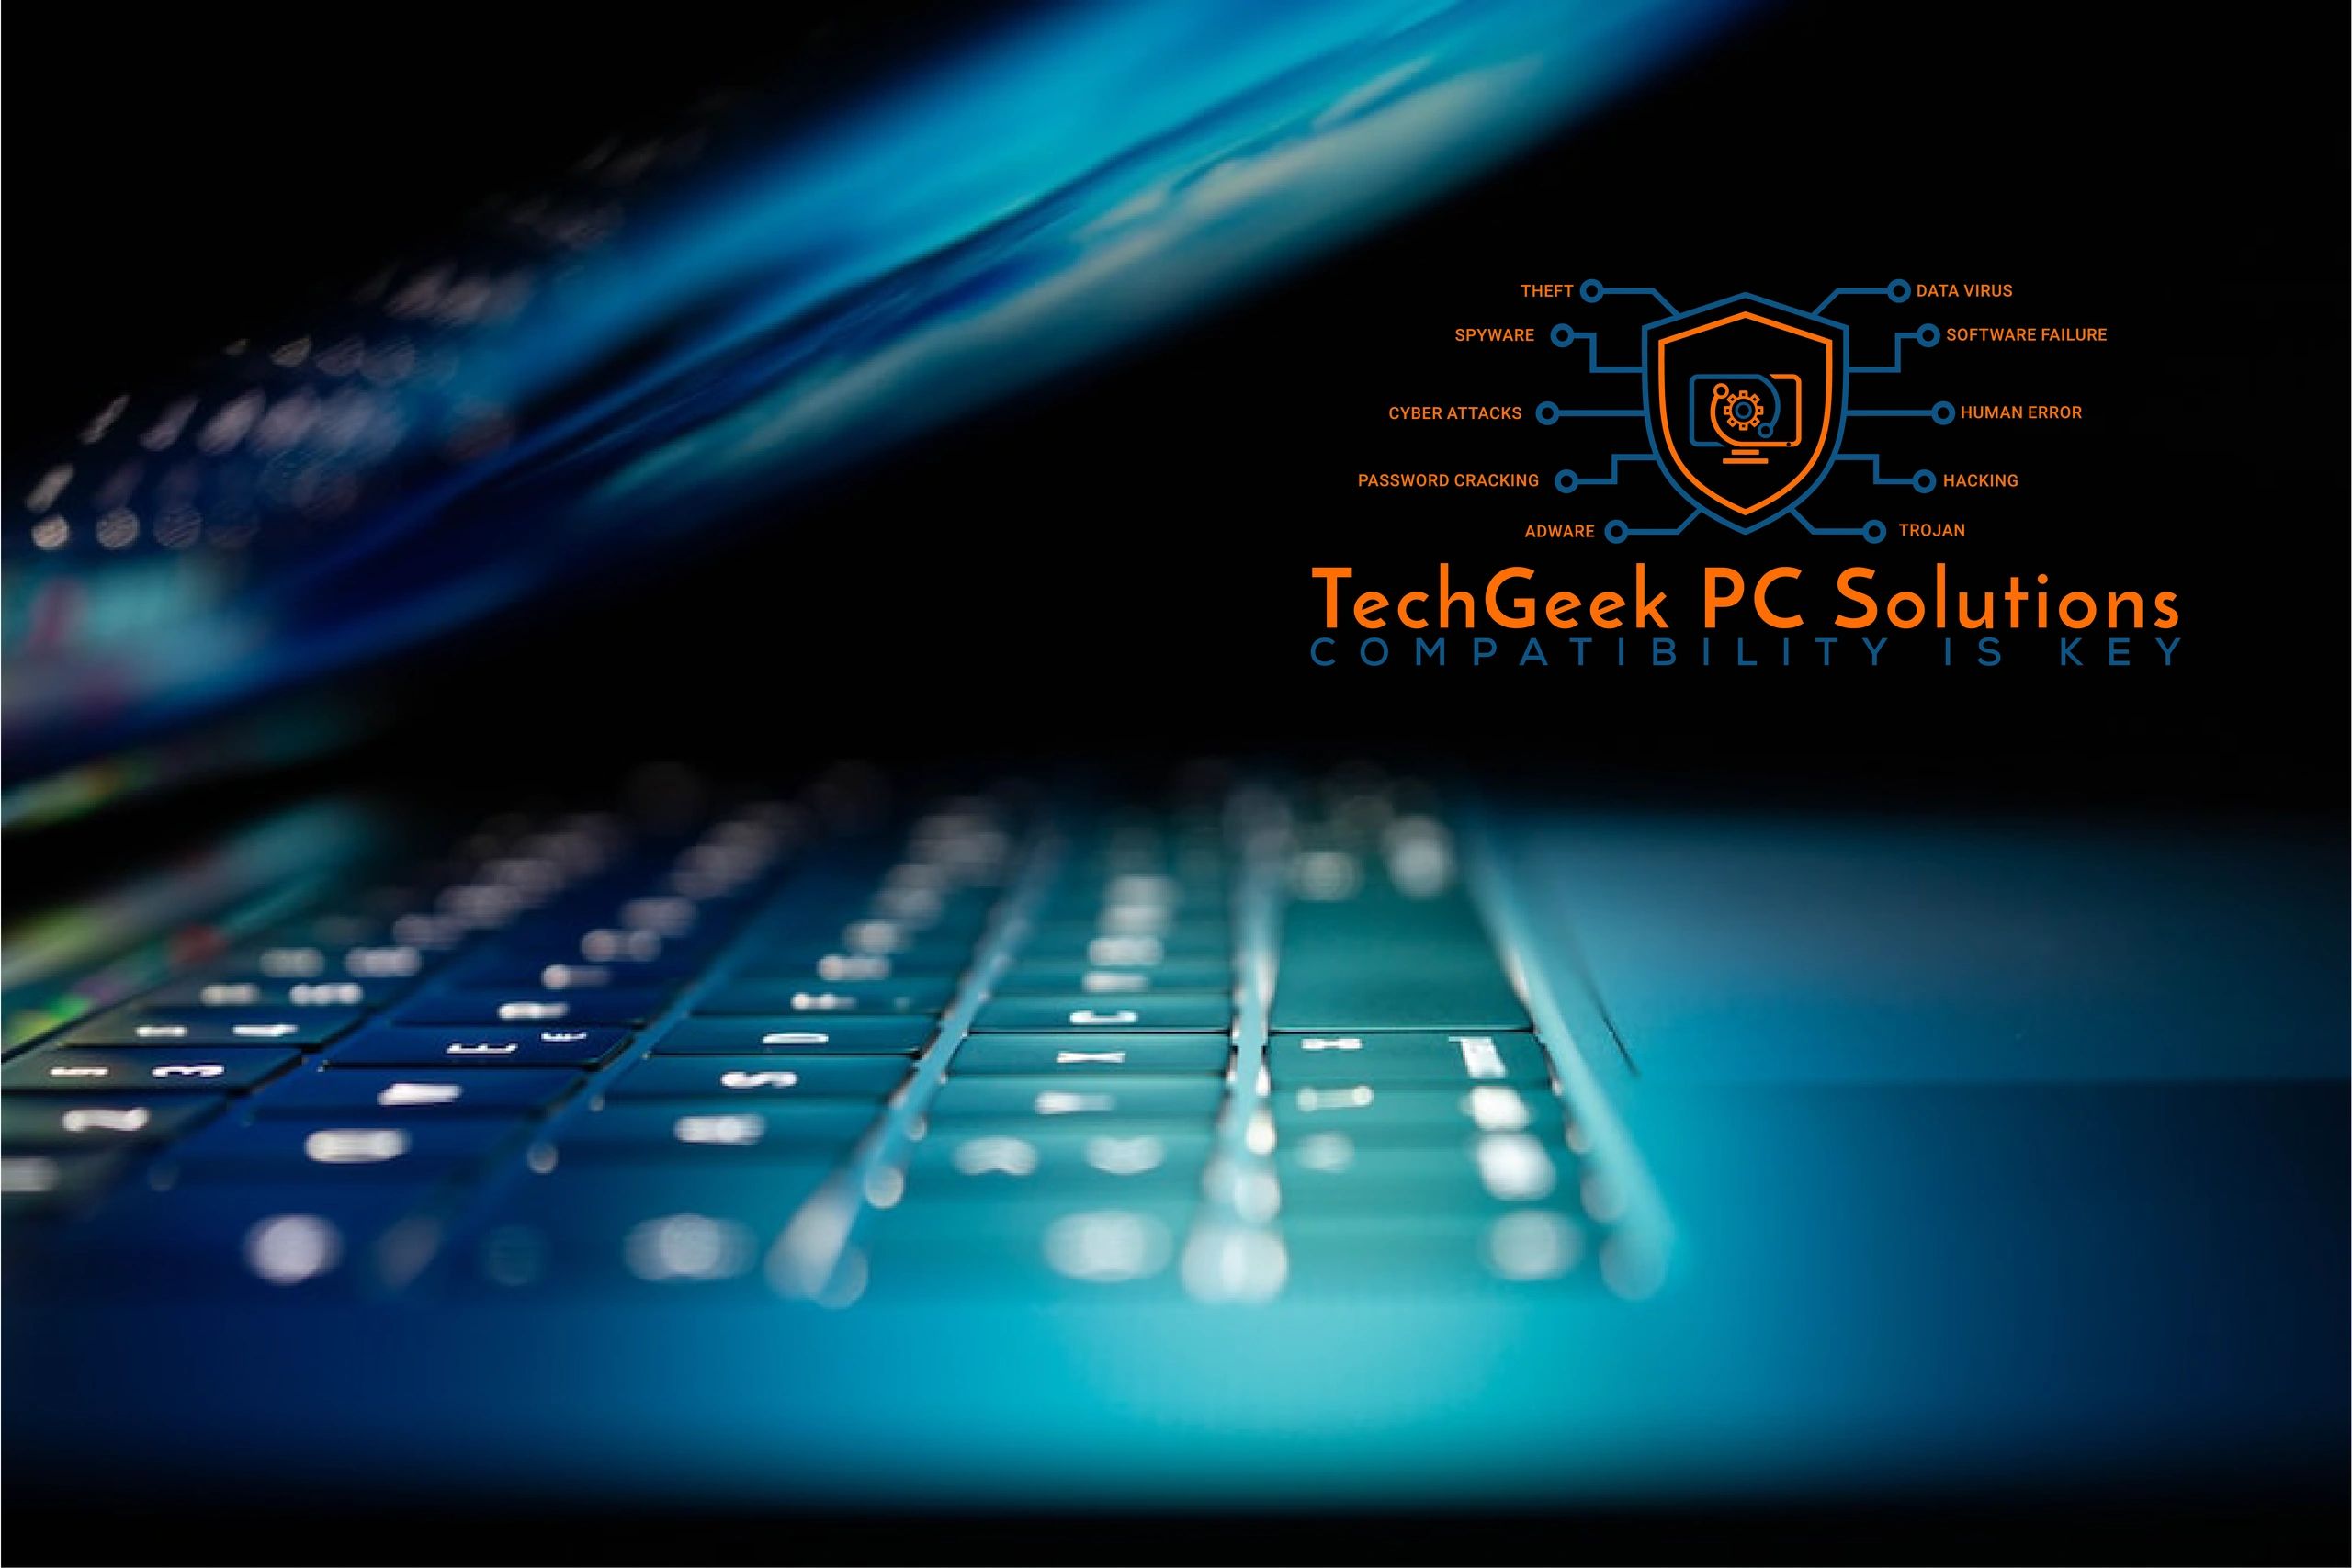 TechGeek PC Solutions